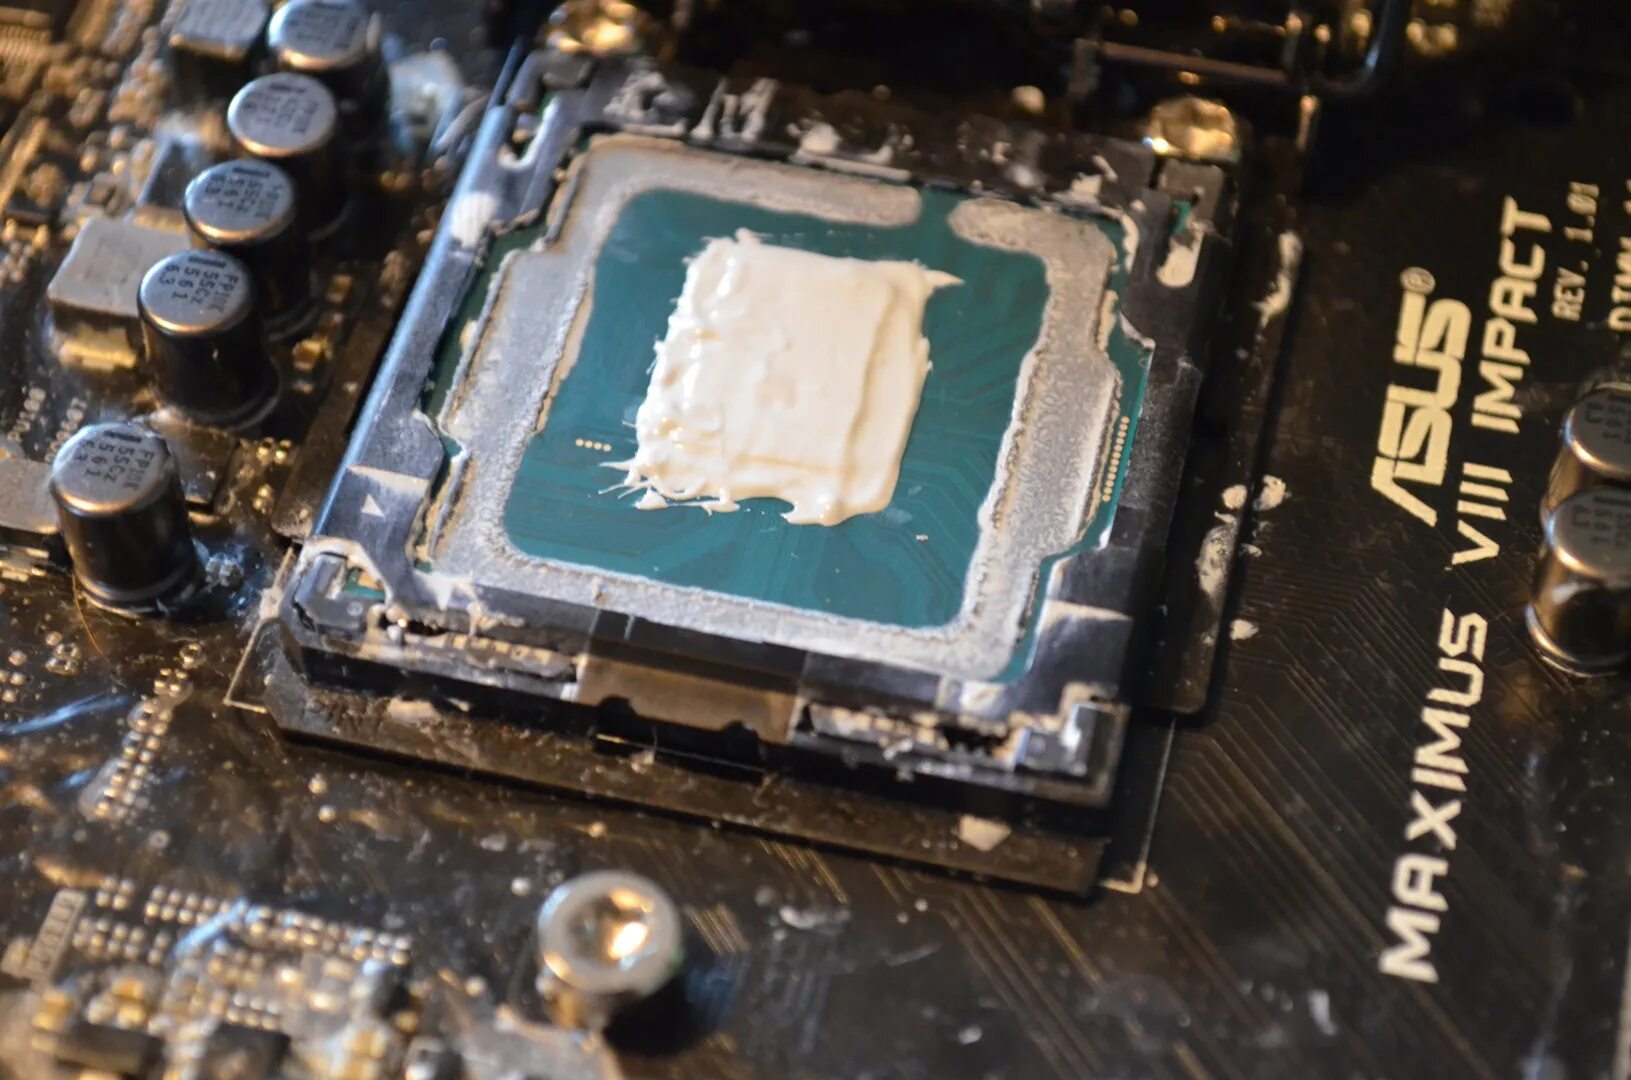 Процессор Intel термопаста. Термопаста Интел под крышкой. Термопаста для скальпирования процессора. Термоинтерфейс асус.